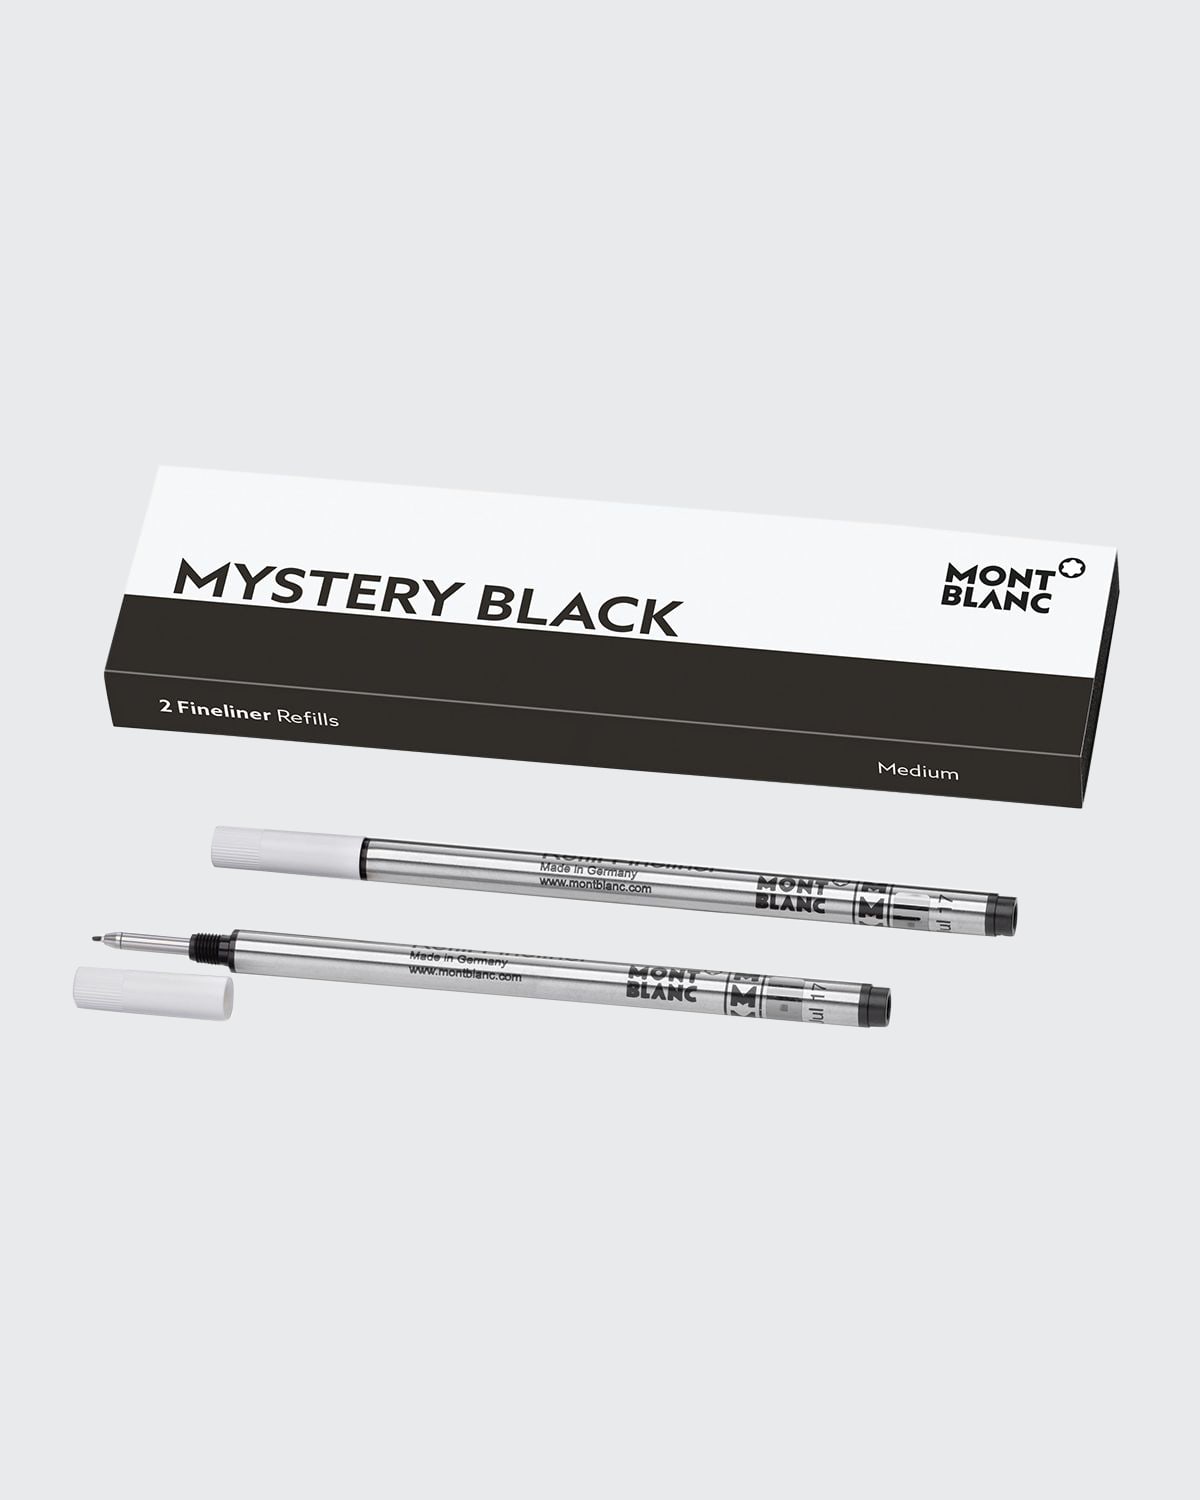 2 Fineliner Pen Refills (M), Mystery Black